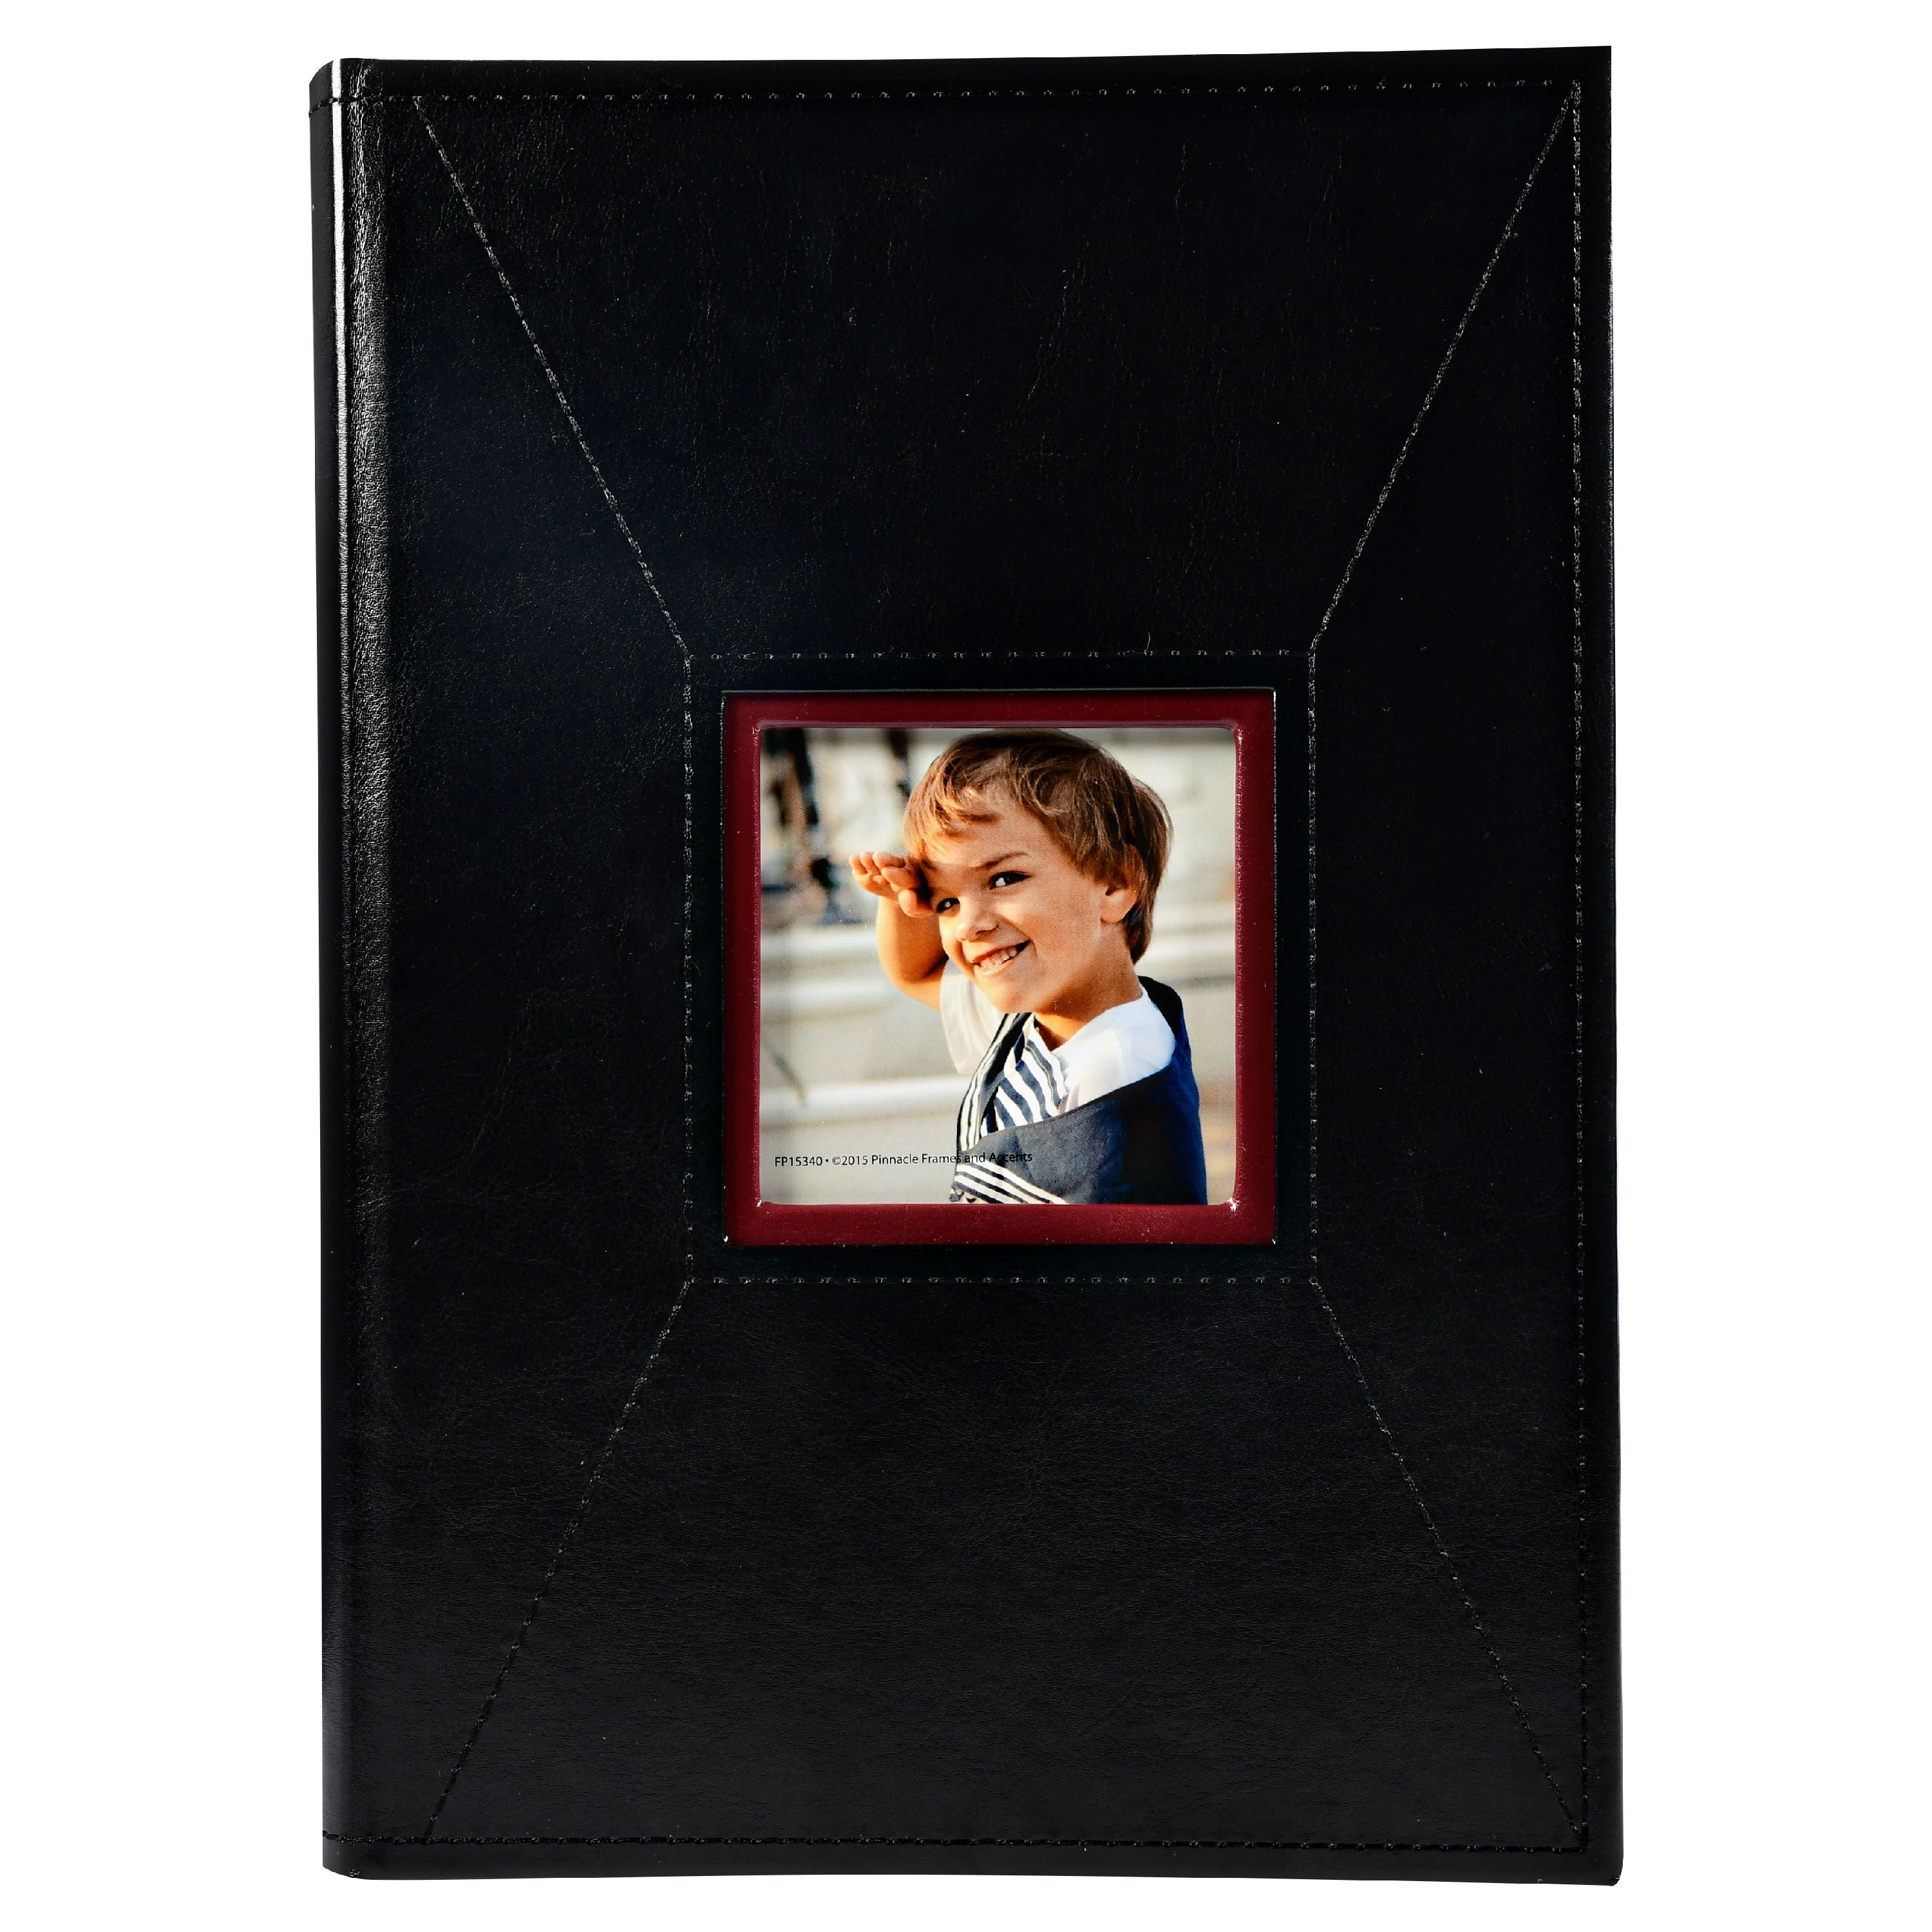 Black Stripe Beige Fabric 200 Pocket 6" x 4" Natural Style Photo Picture Album 